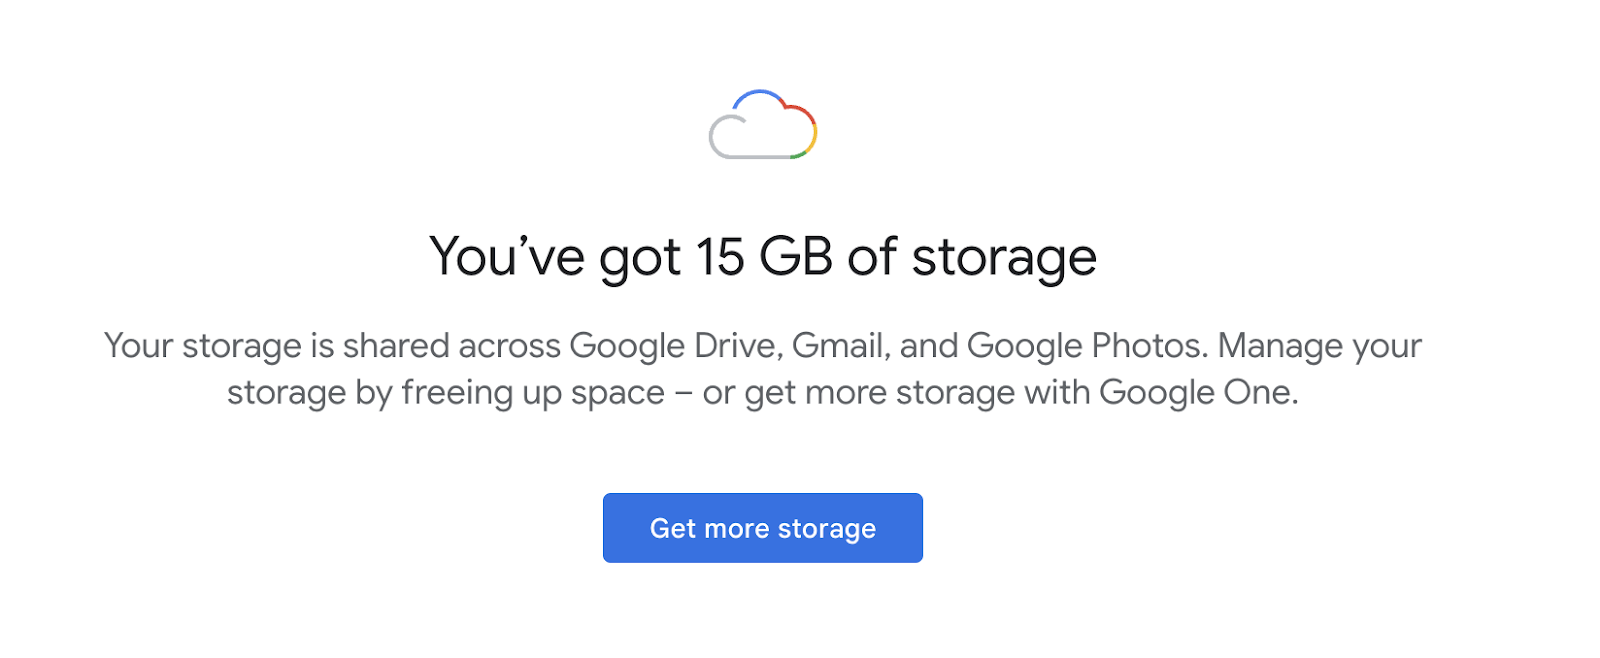 Google drive image